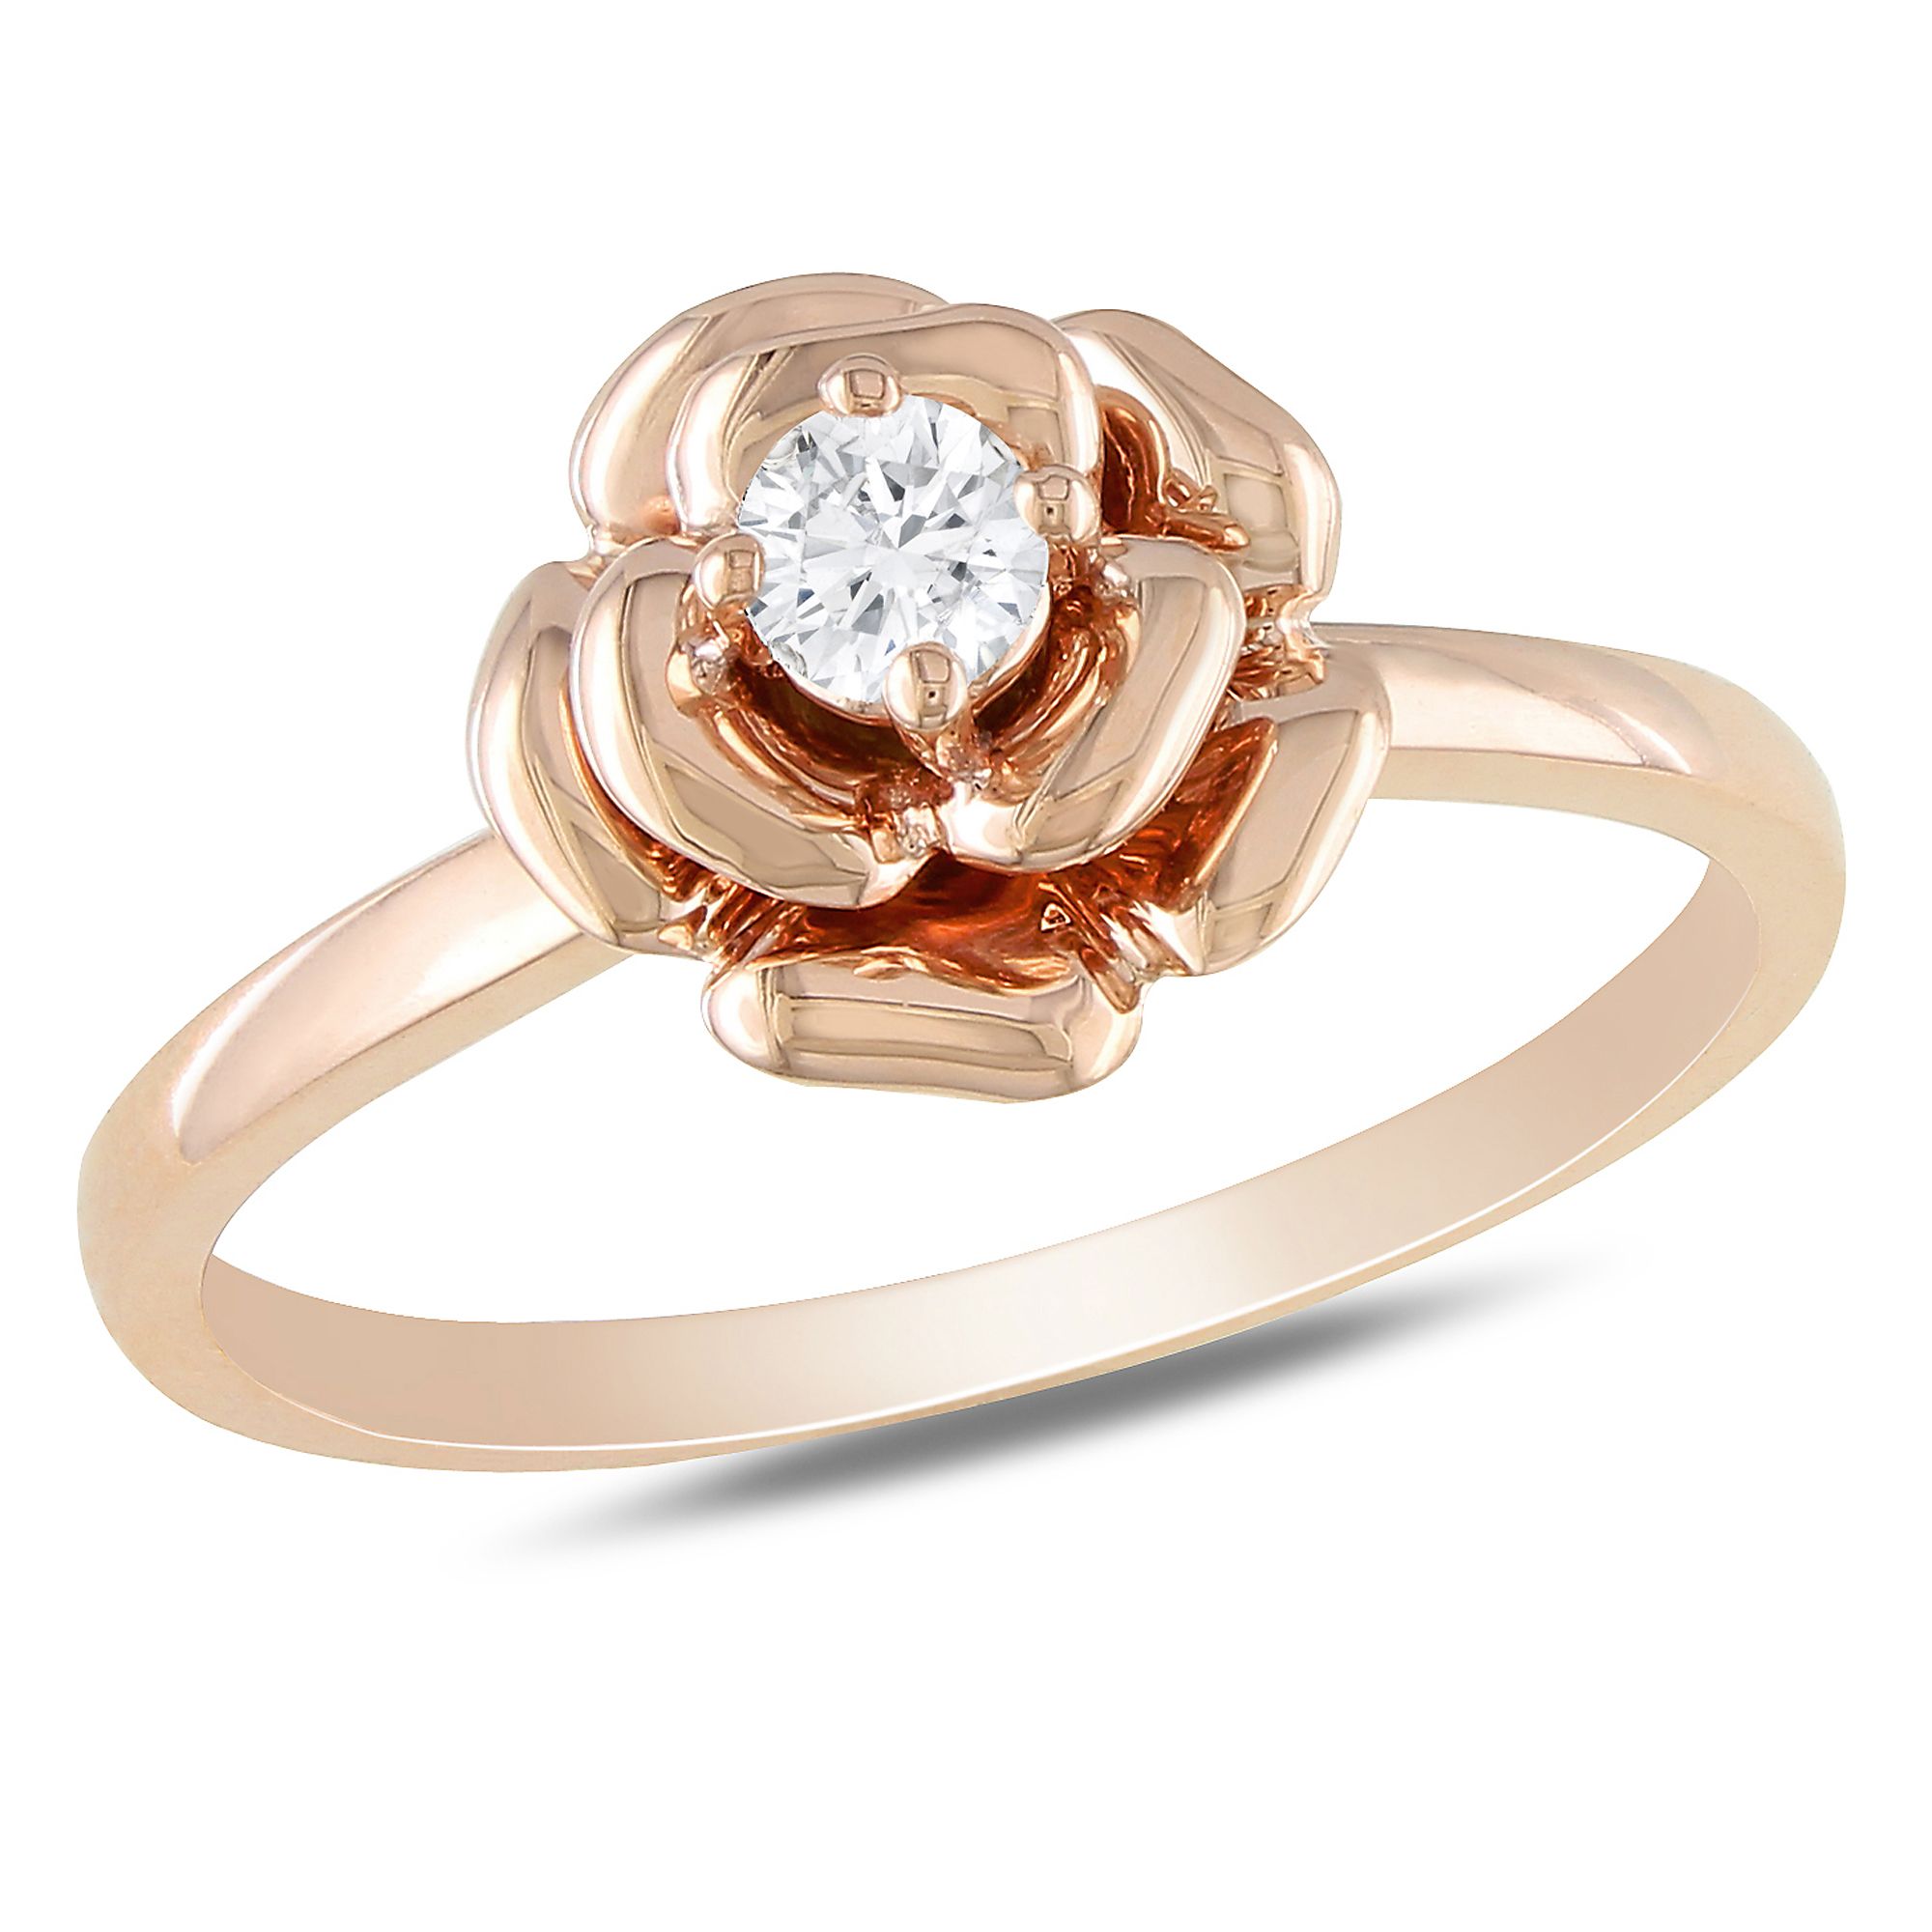 1/7 CTTW Diamond Fashion Ring Set in 10K Pink Gold (GH I2;I3)